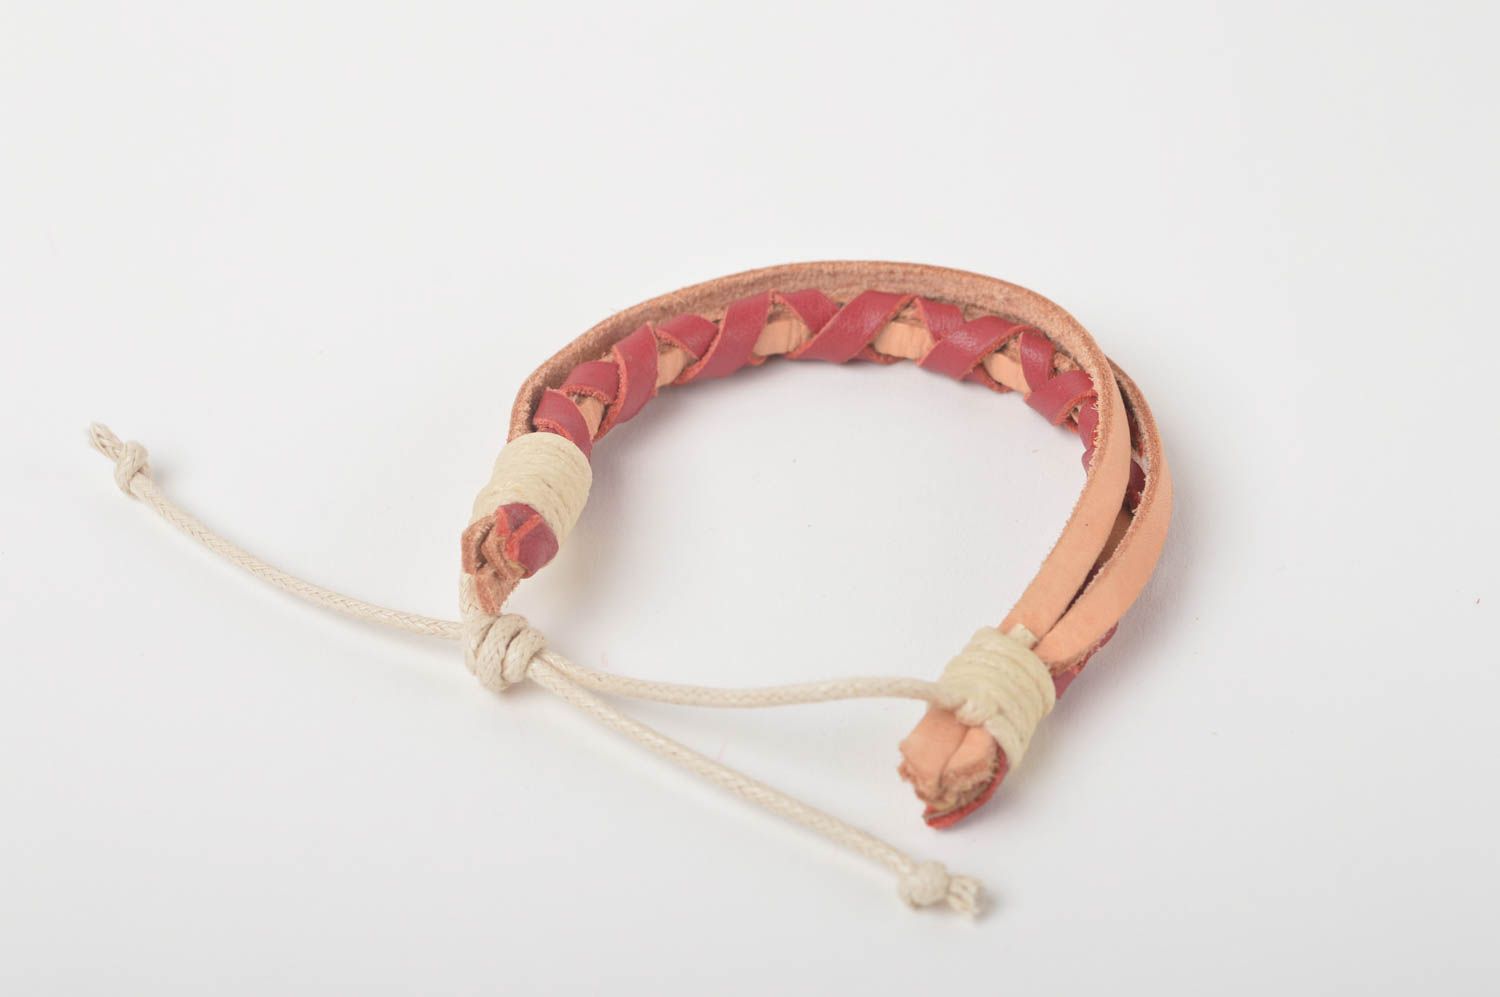 Stylish handmade leather bracelet designs leather goods cool jewelry photo 2